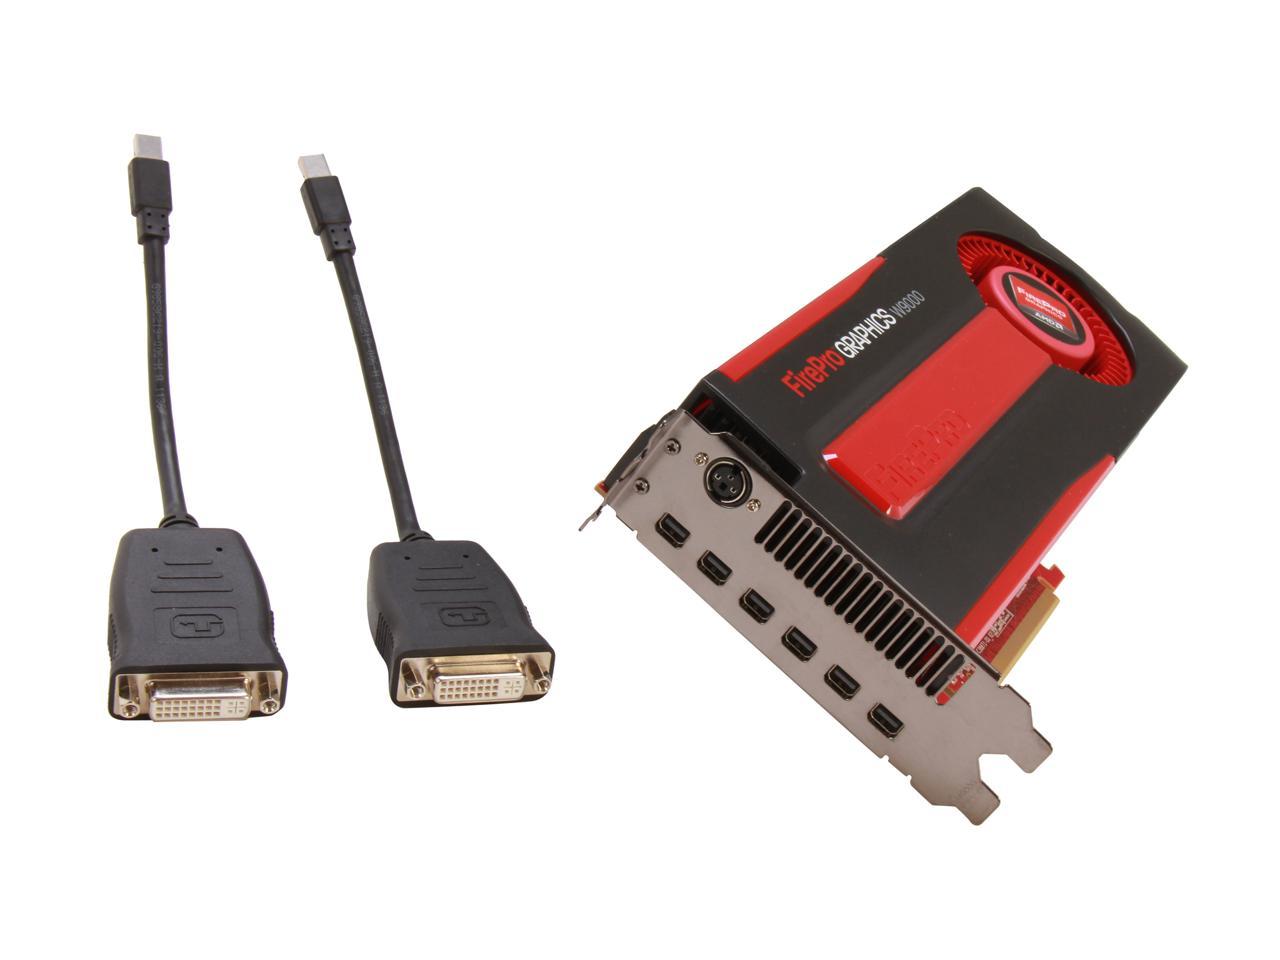 AMD FirePro W9000 100-505859 6GB GDDR5 PCI-Express 3.0 x16 Workstation  Video Card